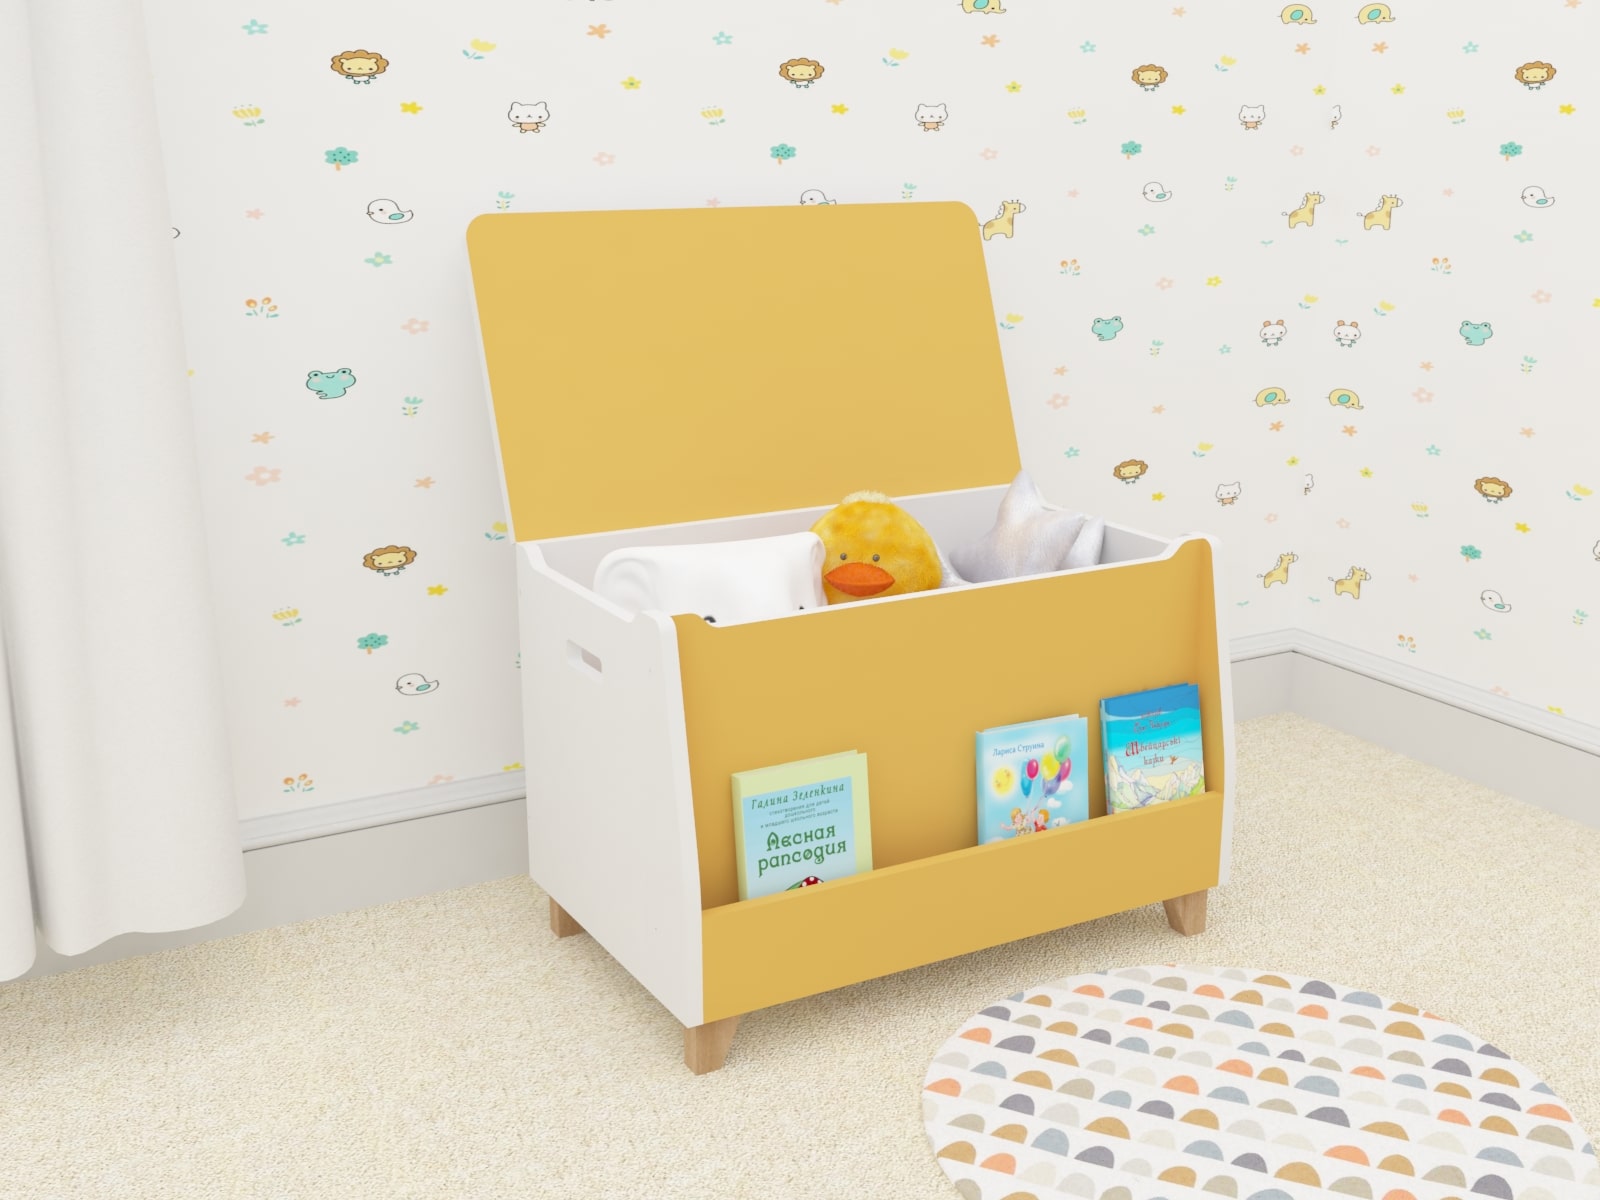 Toy Box- Kid's Room Design Ideas